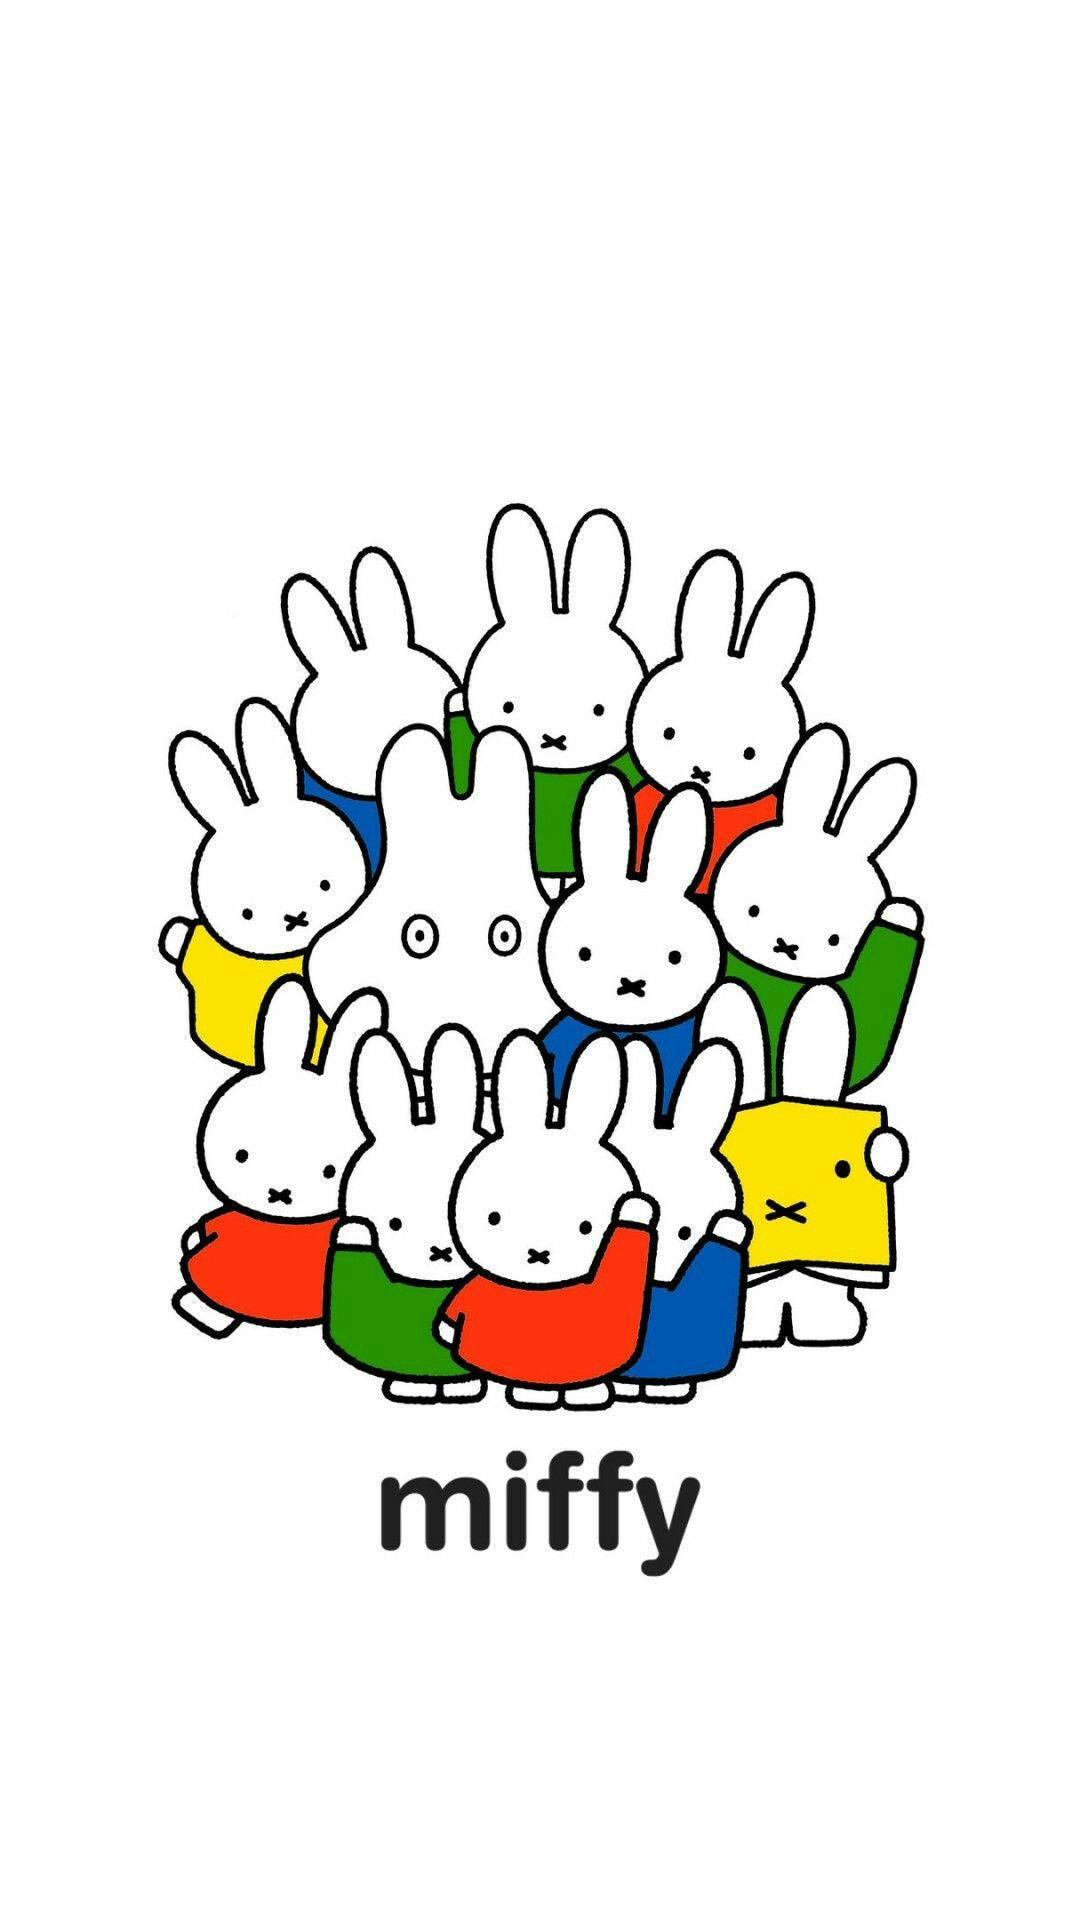 Minimalist Miffy Characters Wallpaper